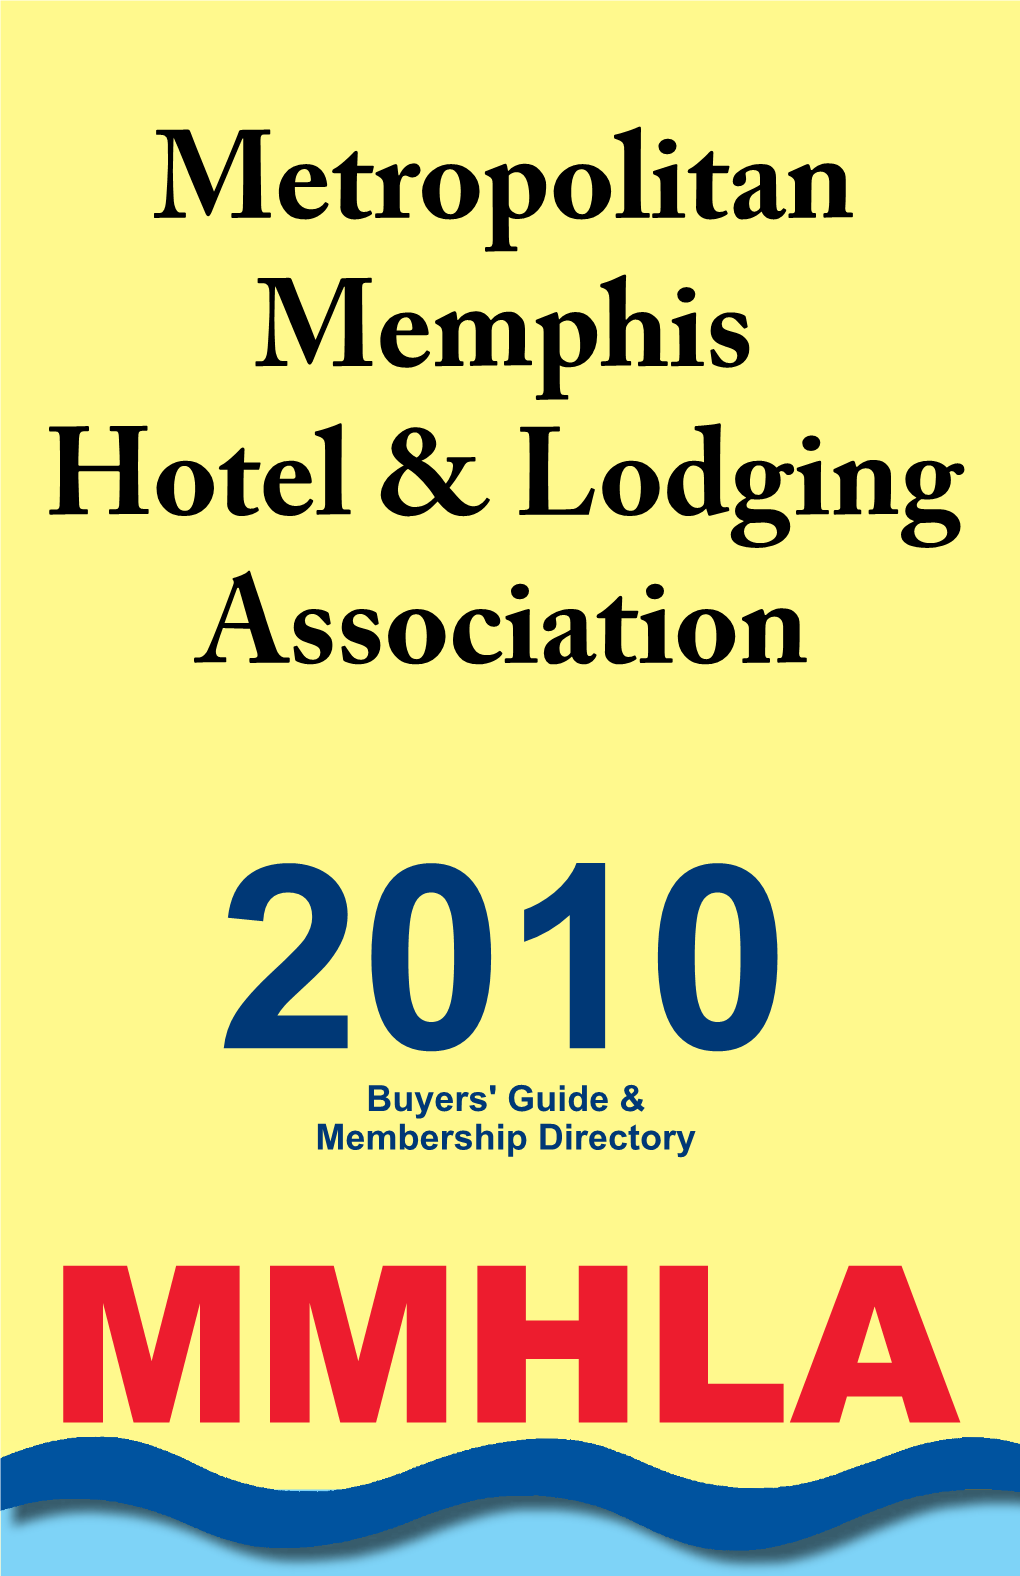 Metropolitan Memphis Hotel & Lodging Association | MMHLA